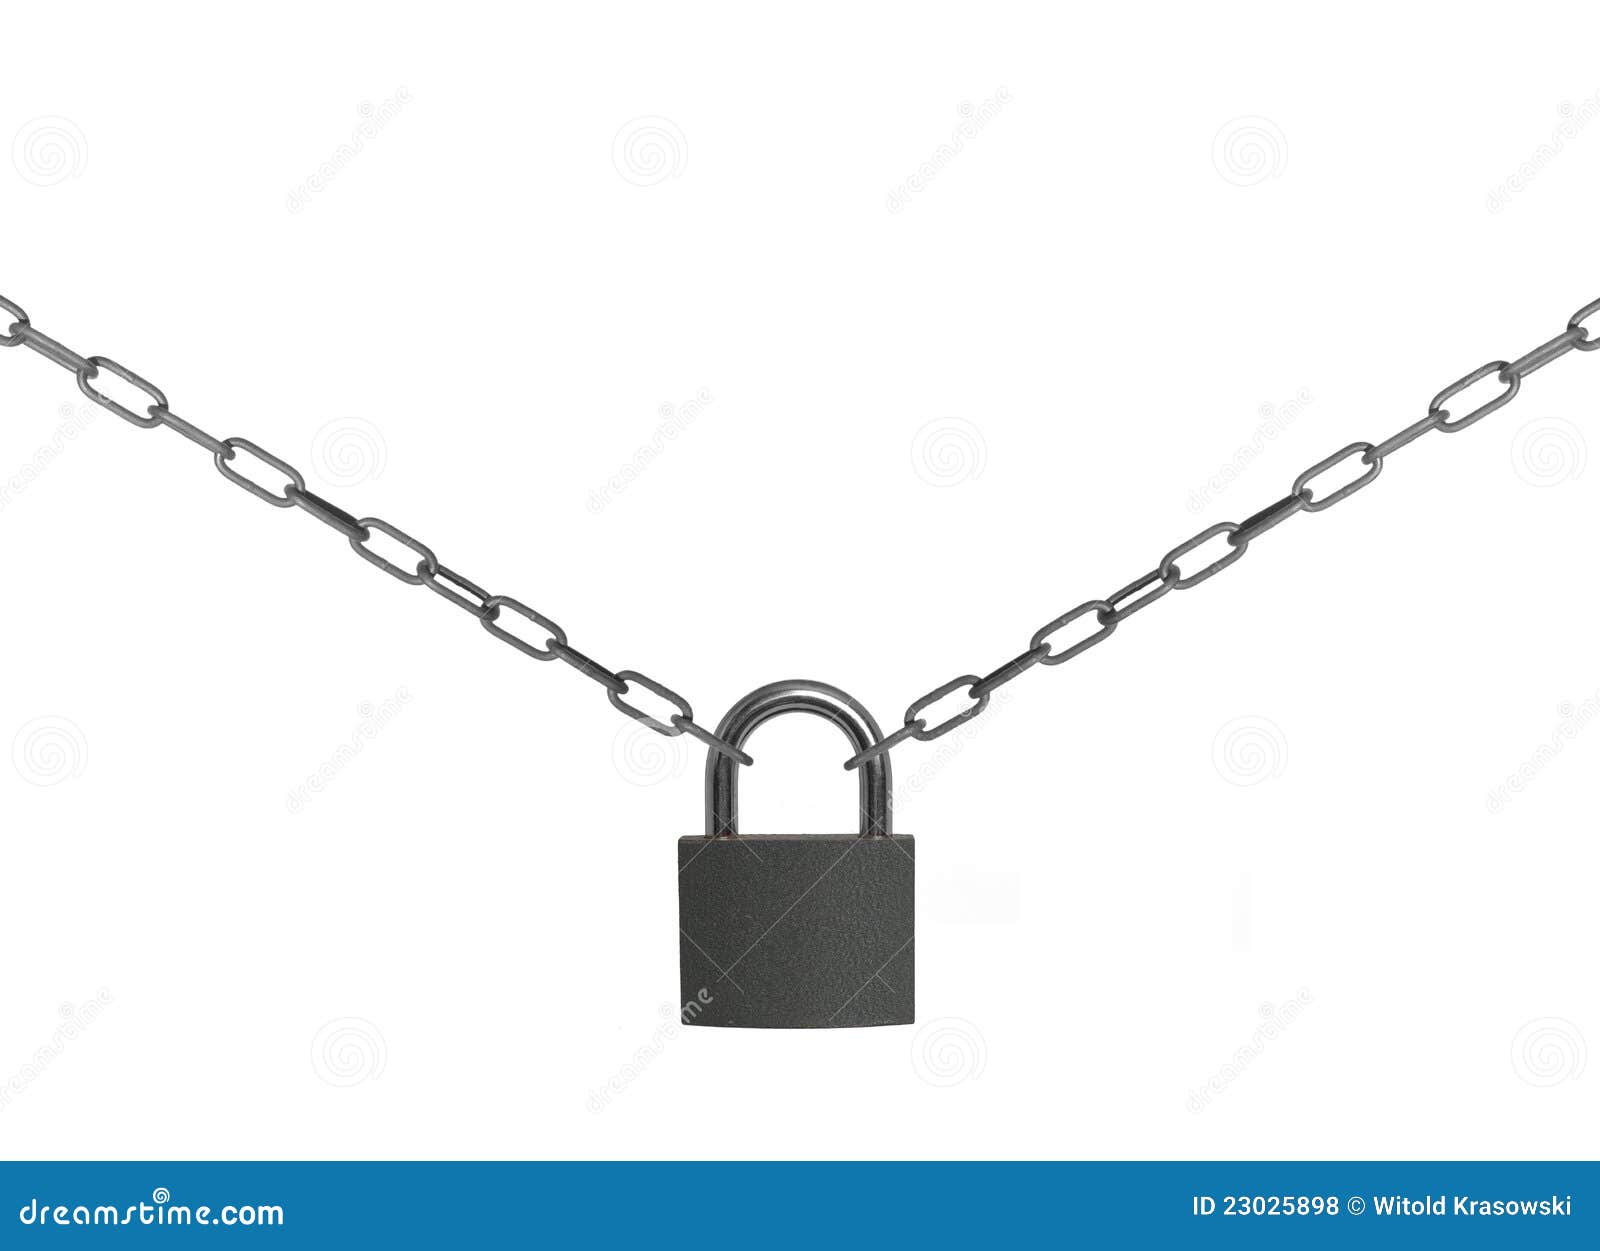 padlock chain